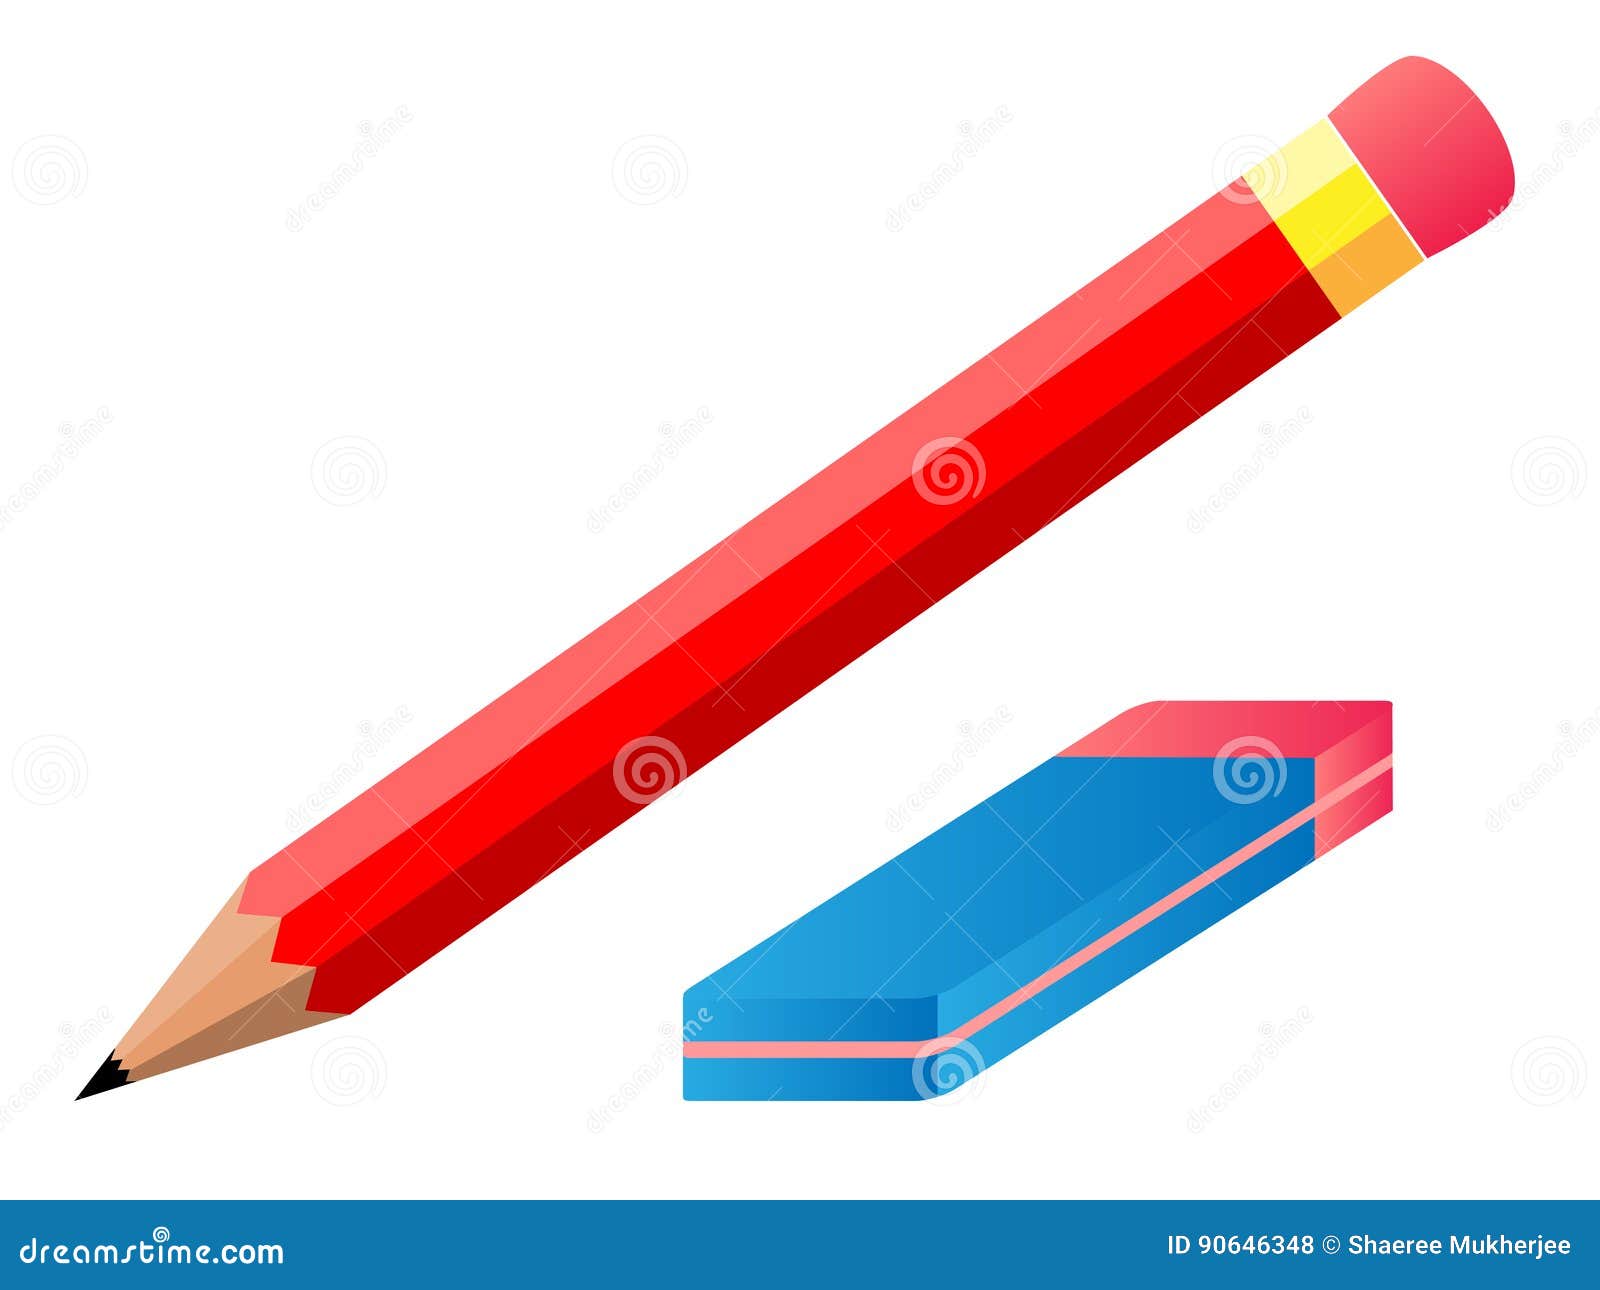  pencil and eraser